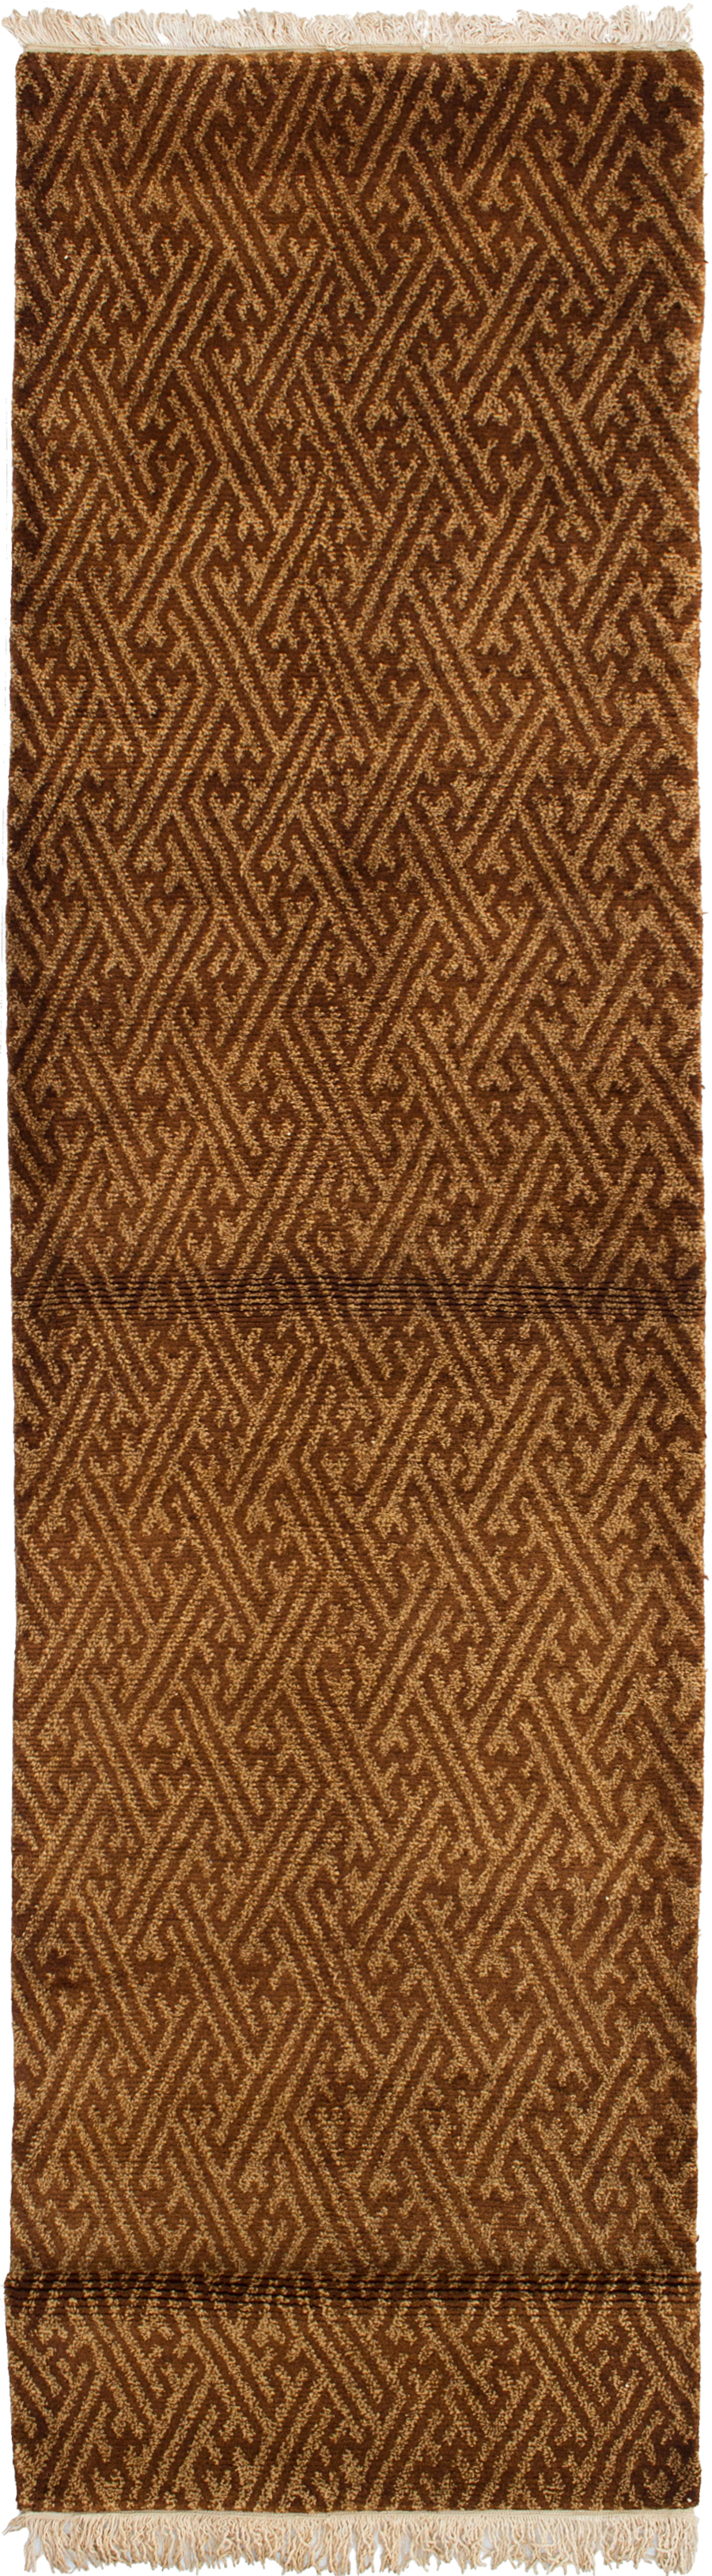 Hand-knotted Kathmandu Dark Brown Wool Rug 2'7" x 13'9" Size: 2'7" x 13'9"  